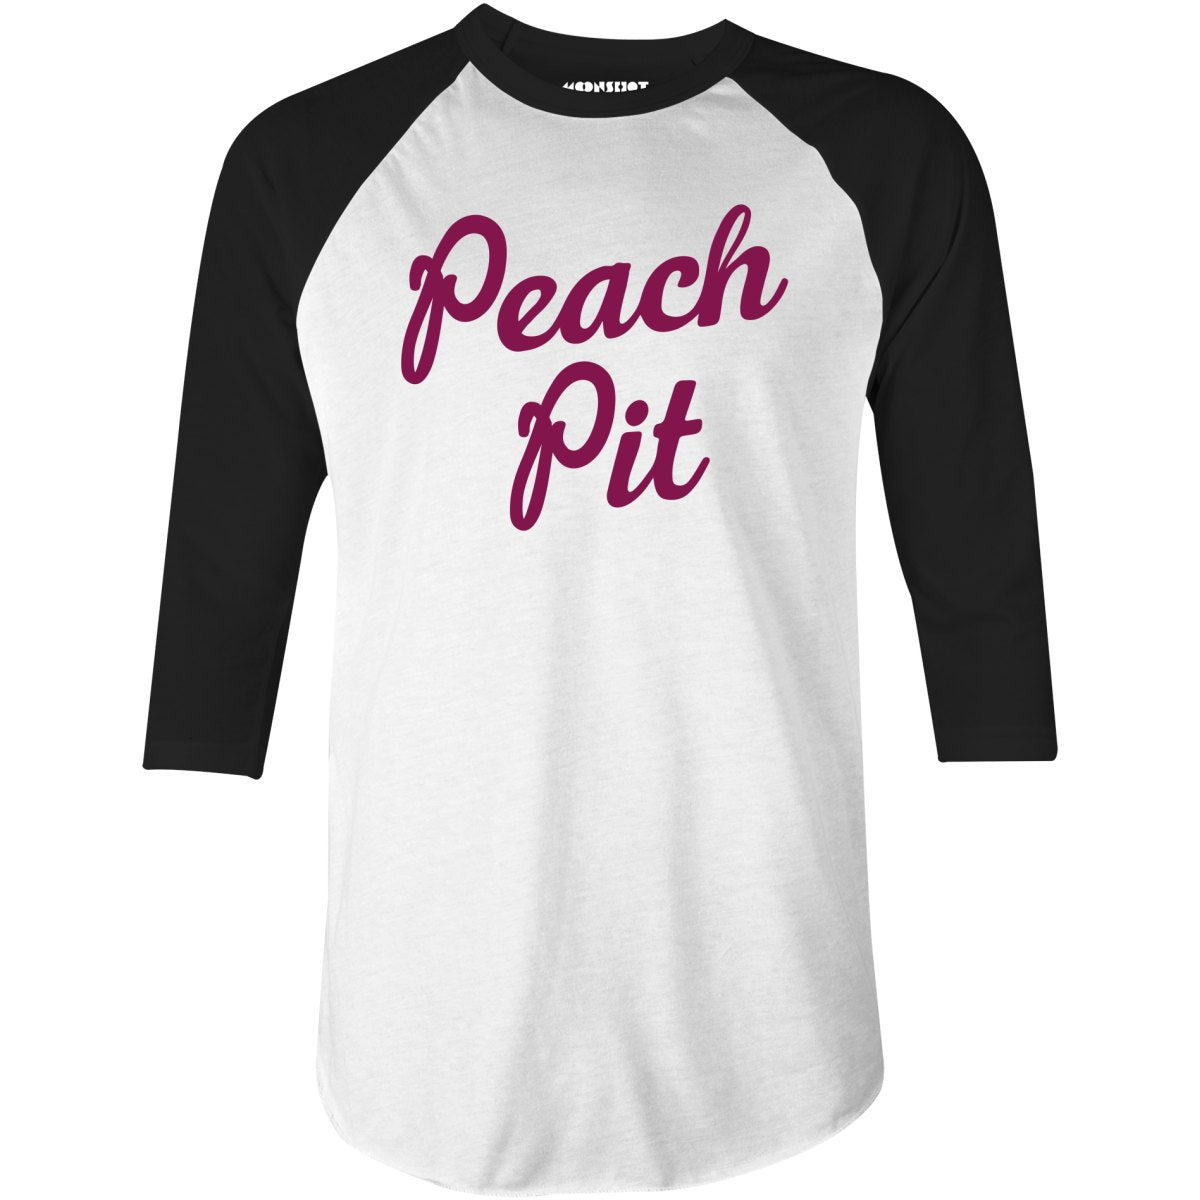 Peach Pit 90210 - 3/4 Sleeve Raglan T-Shirt